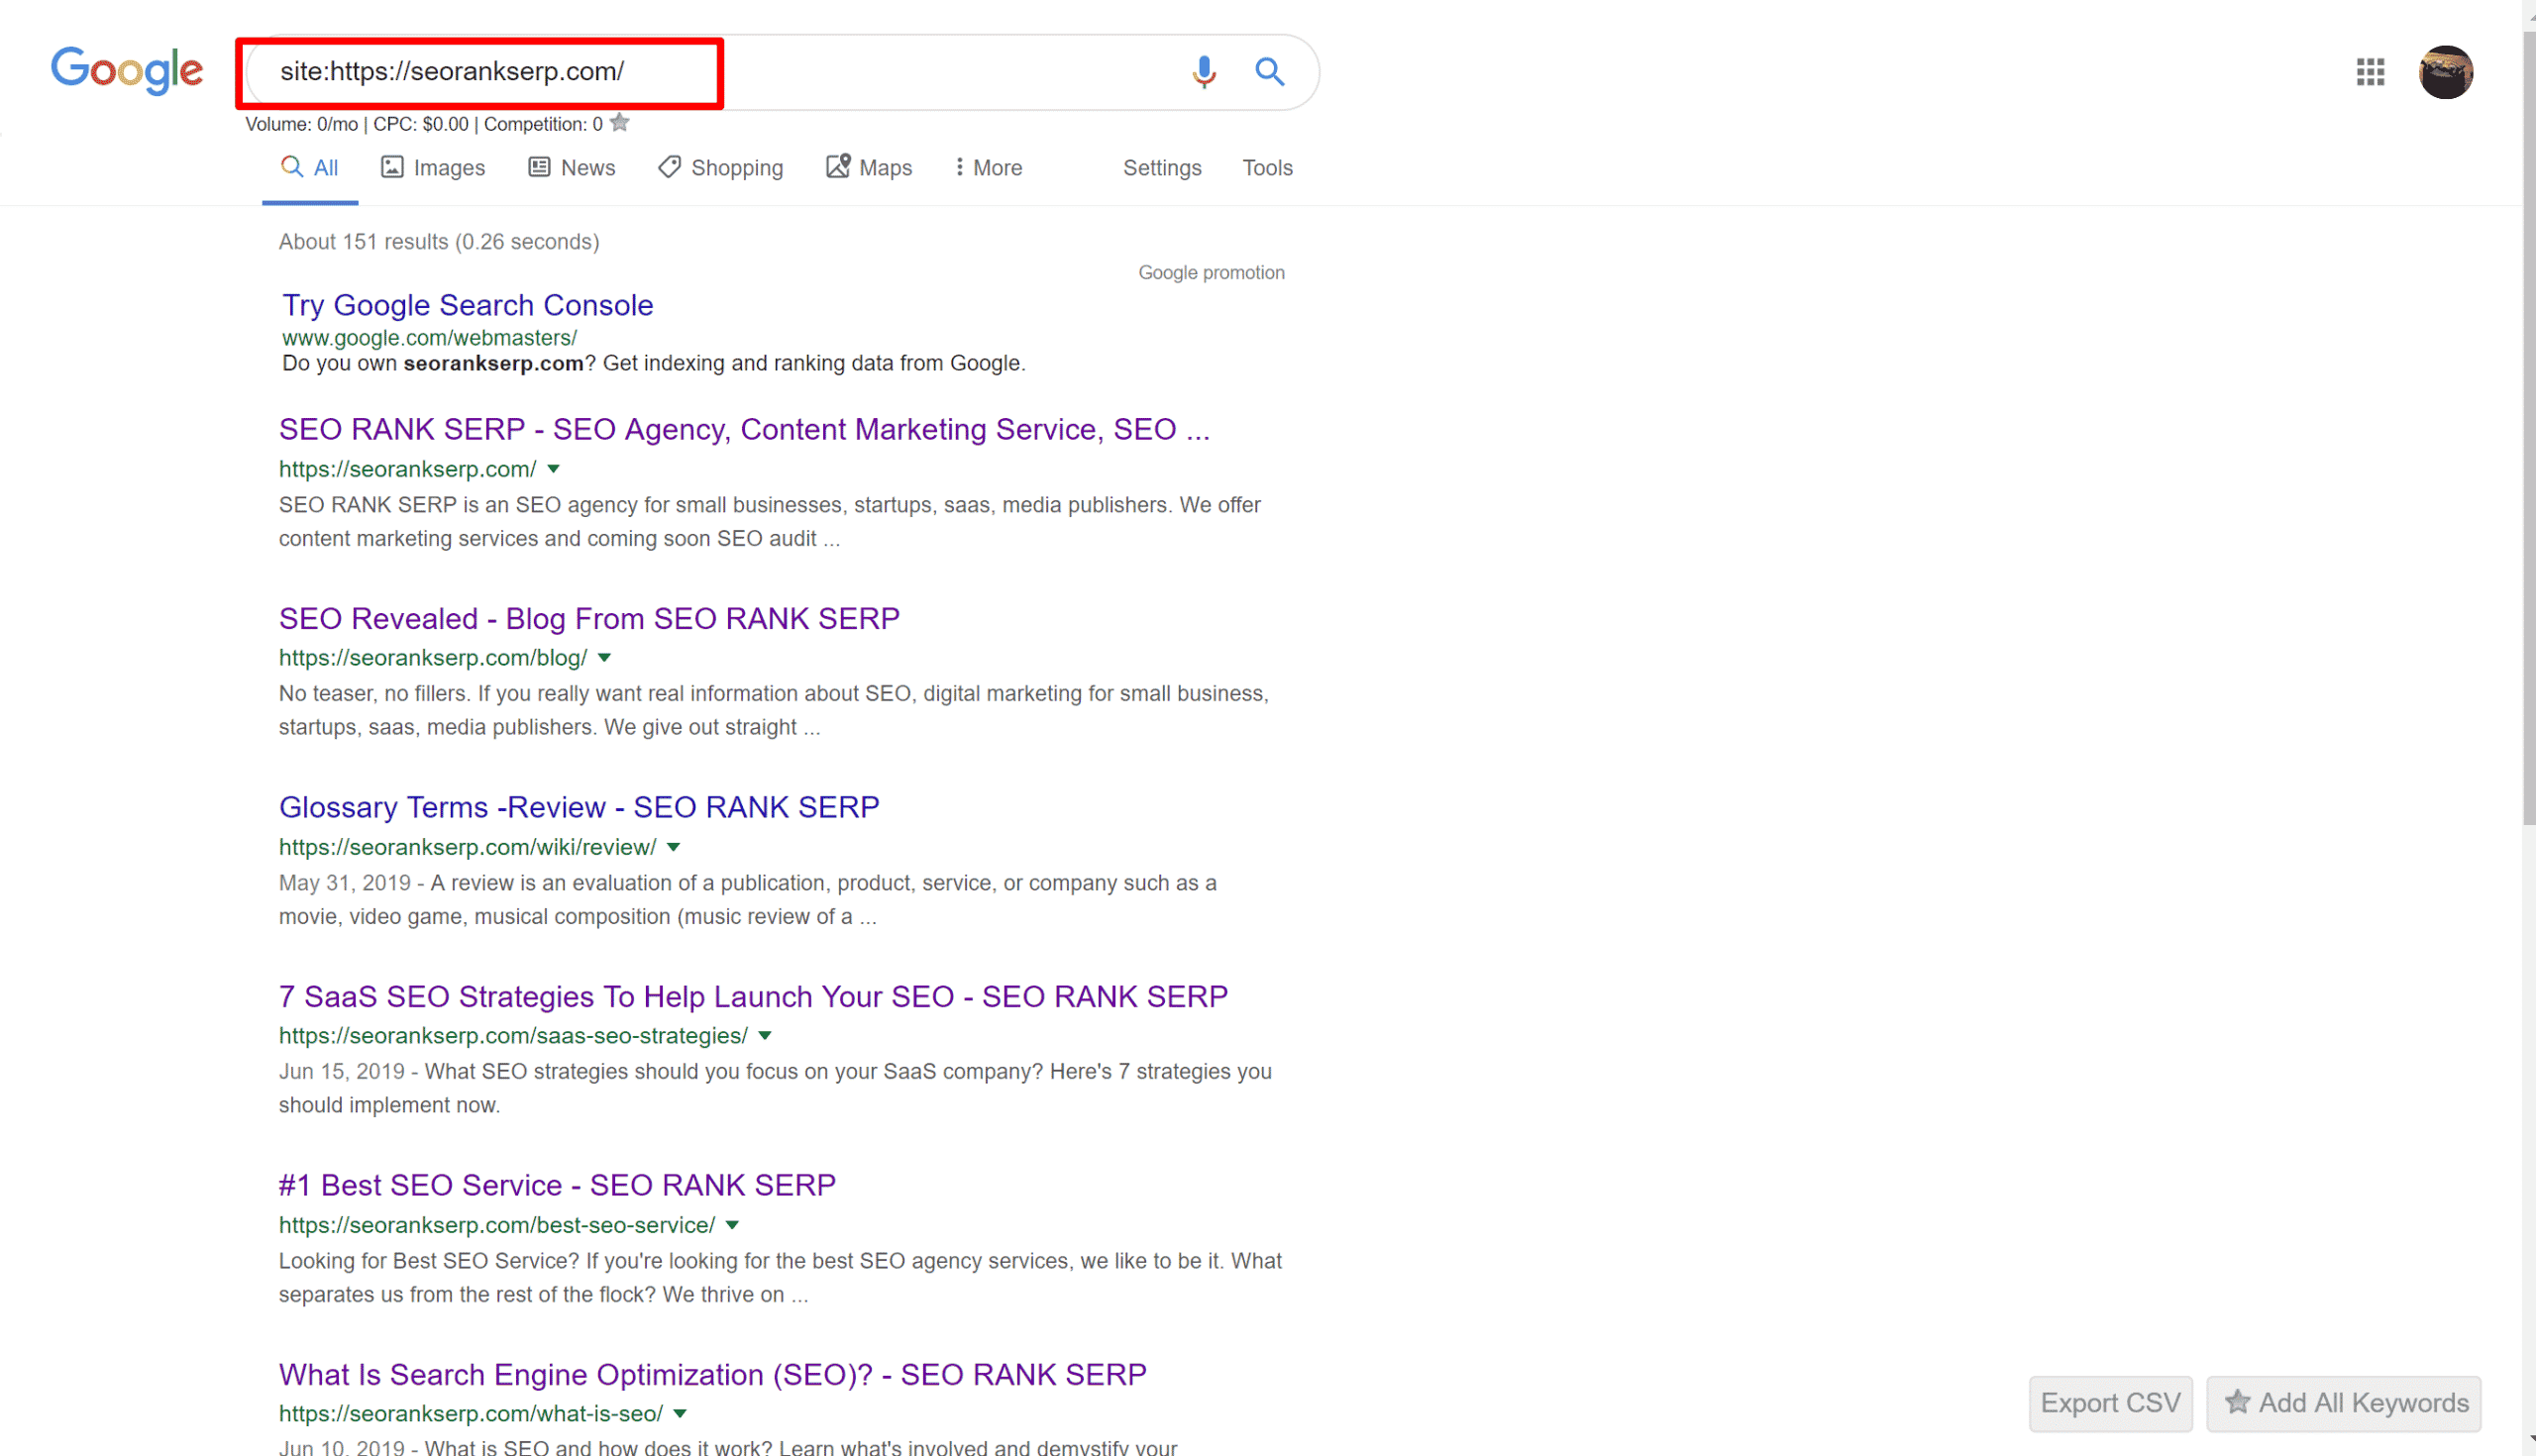 google search site:http://seorankserp.com/